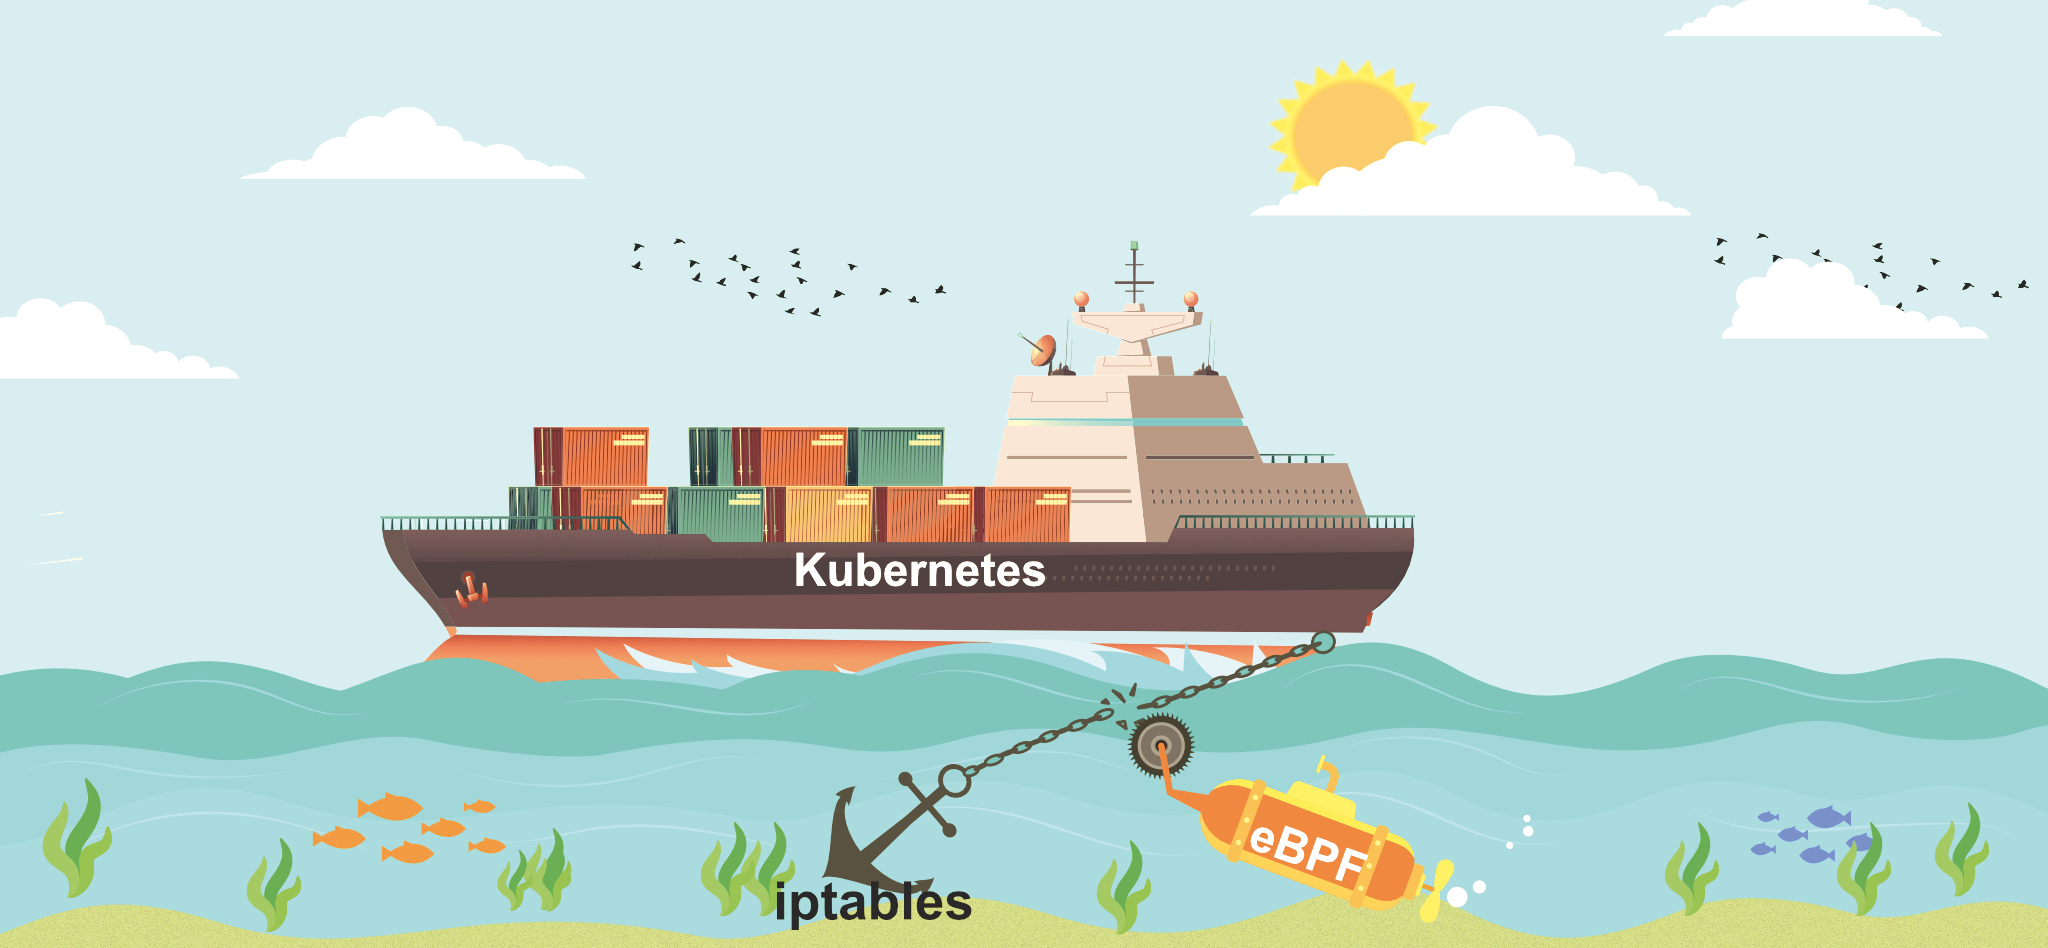 Kubernetes as ship analogy.